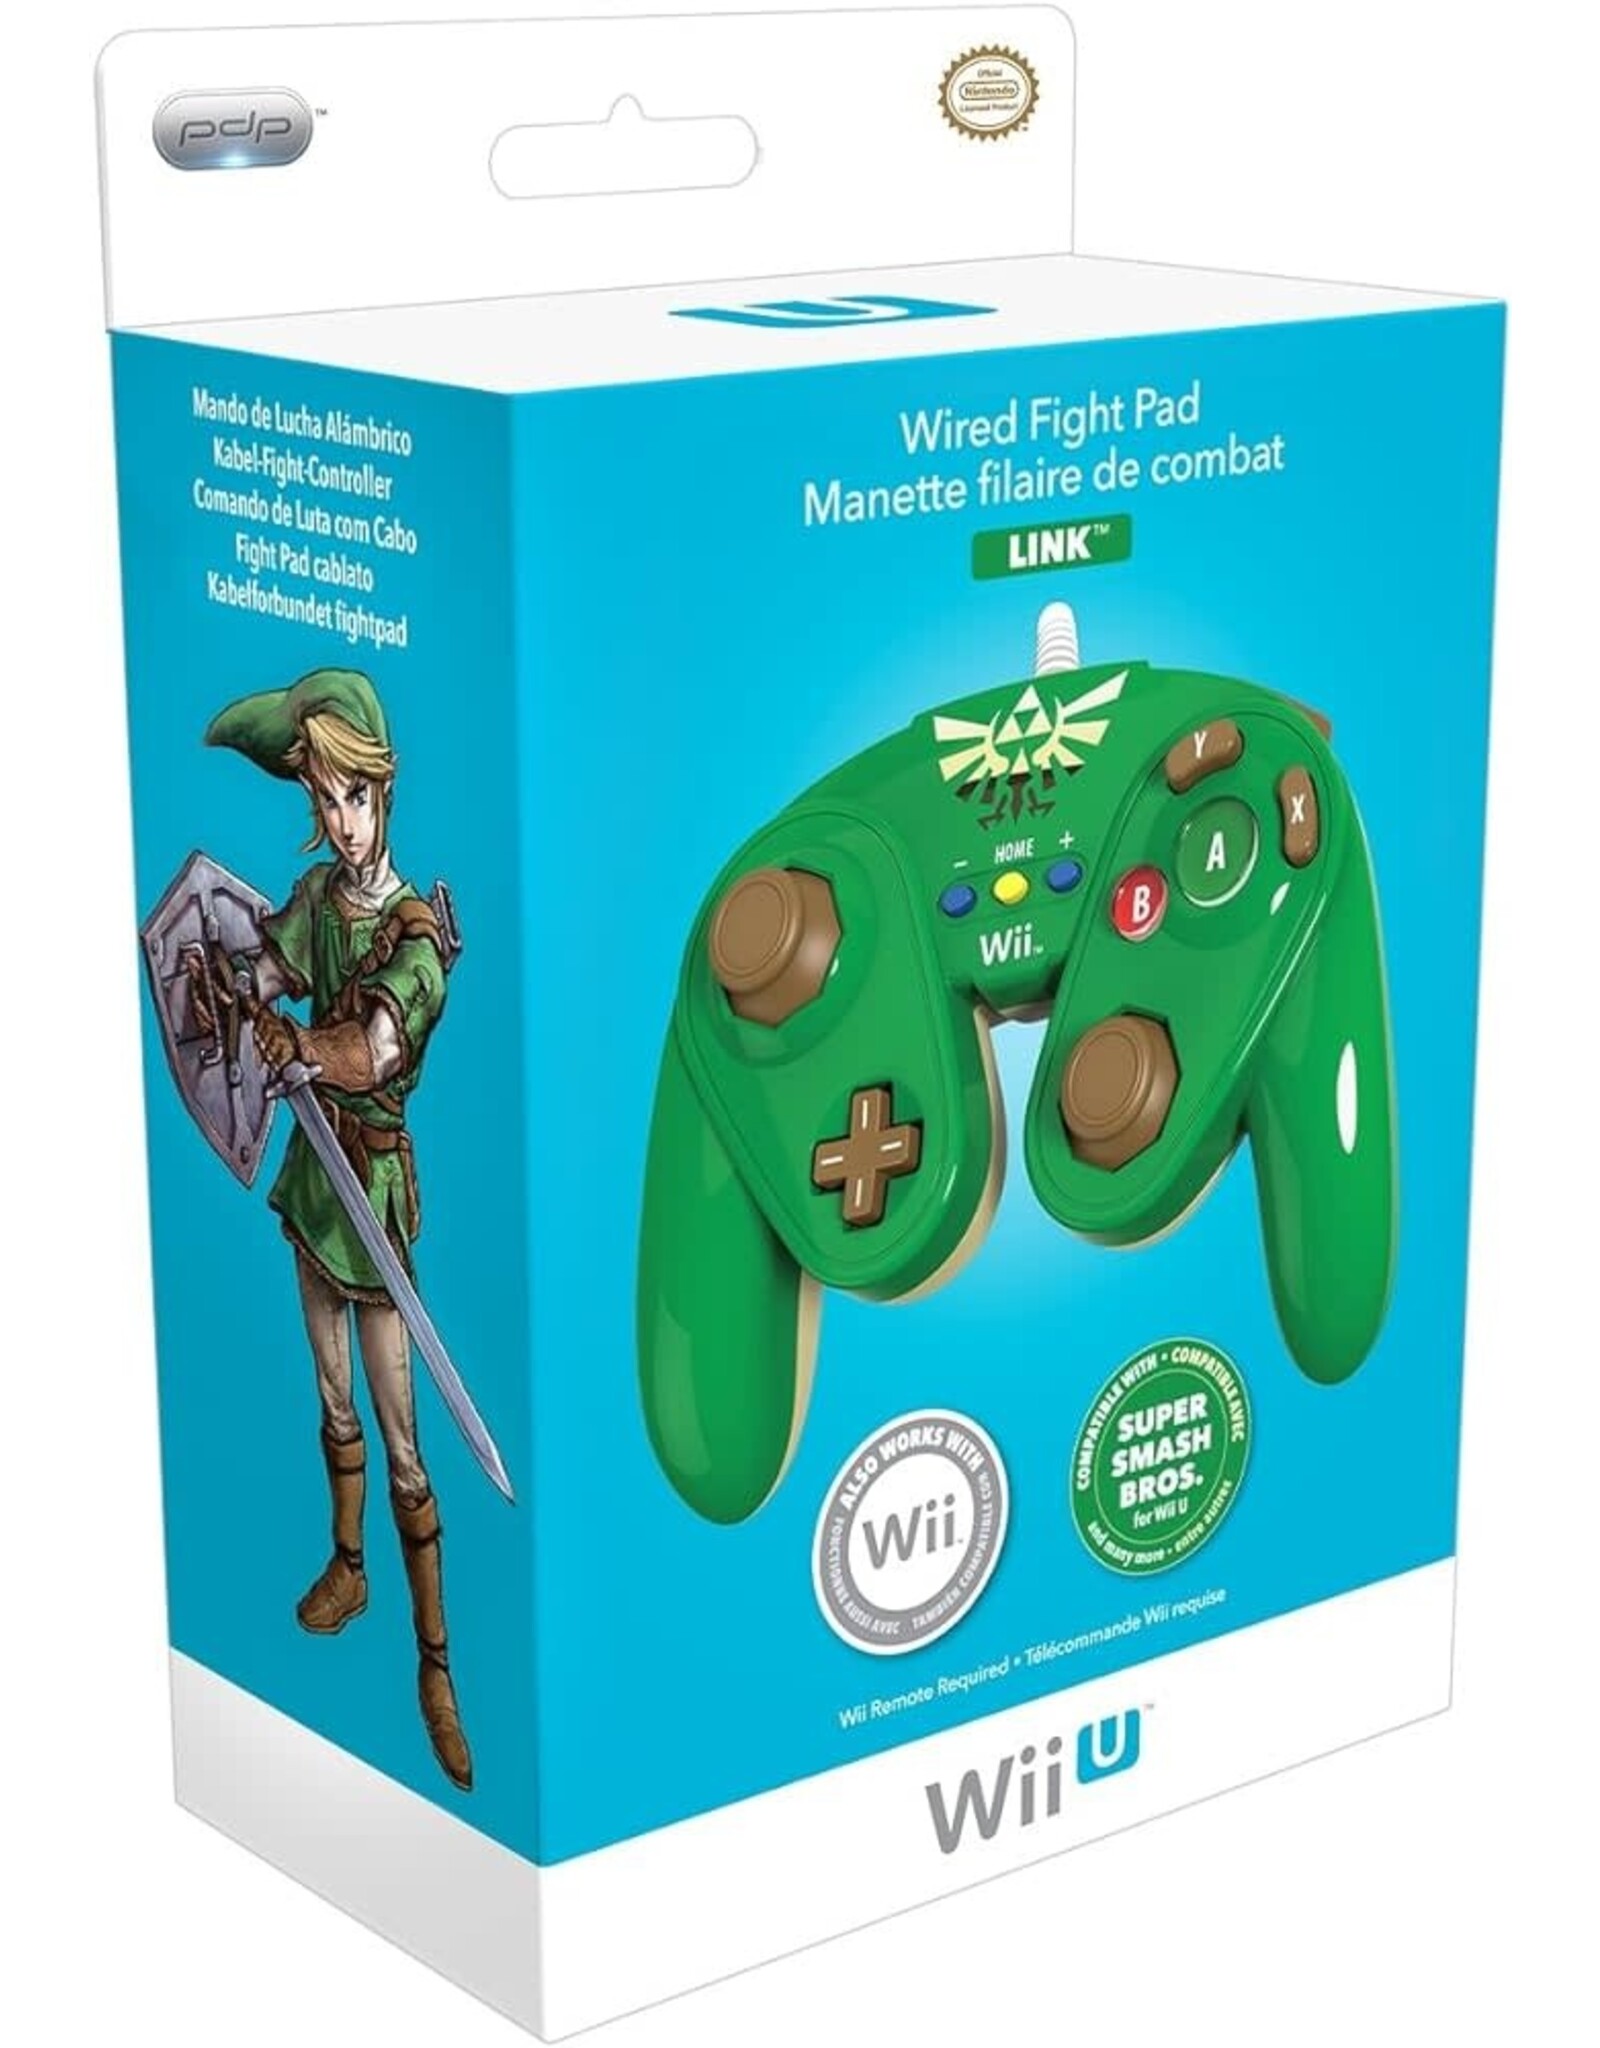 Wii U Wired Fight Pad - Link (Brand New)